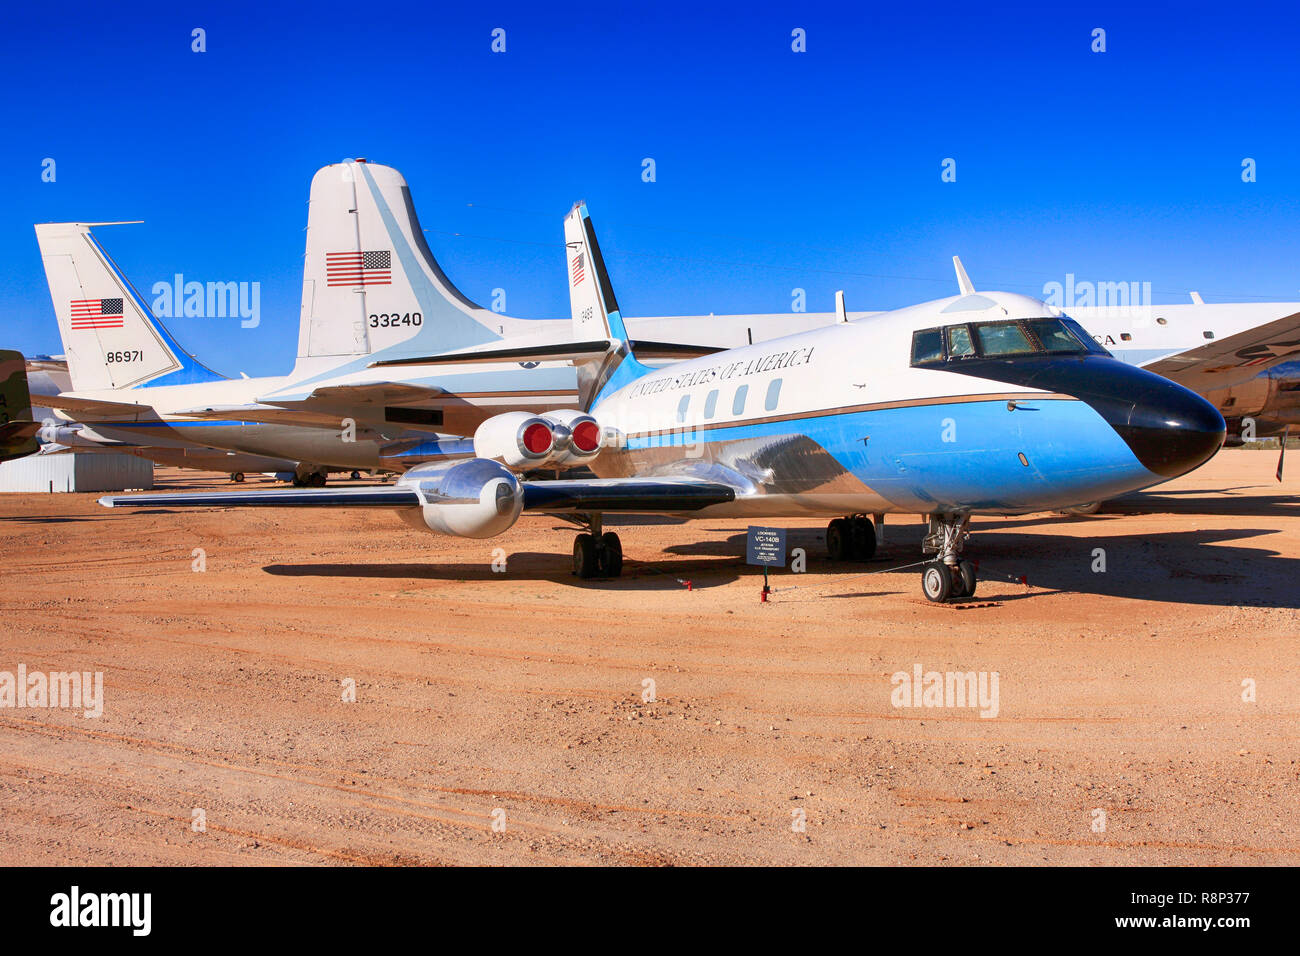 Lockheed VC-140B Jetstar Presidential flight aircraft on display at the Pima Air & Space Museum in Tucson, AZ Stock Photo